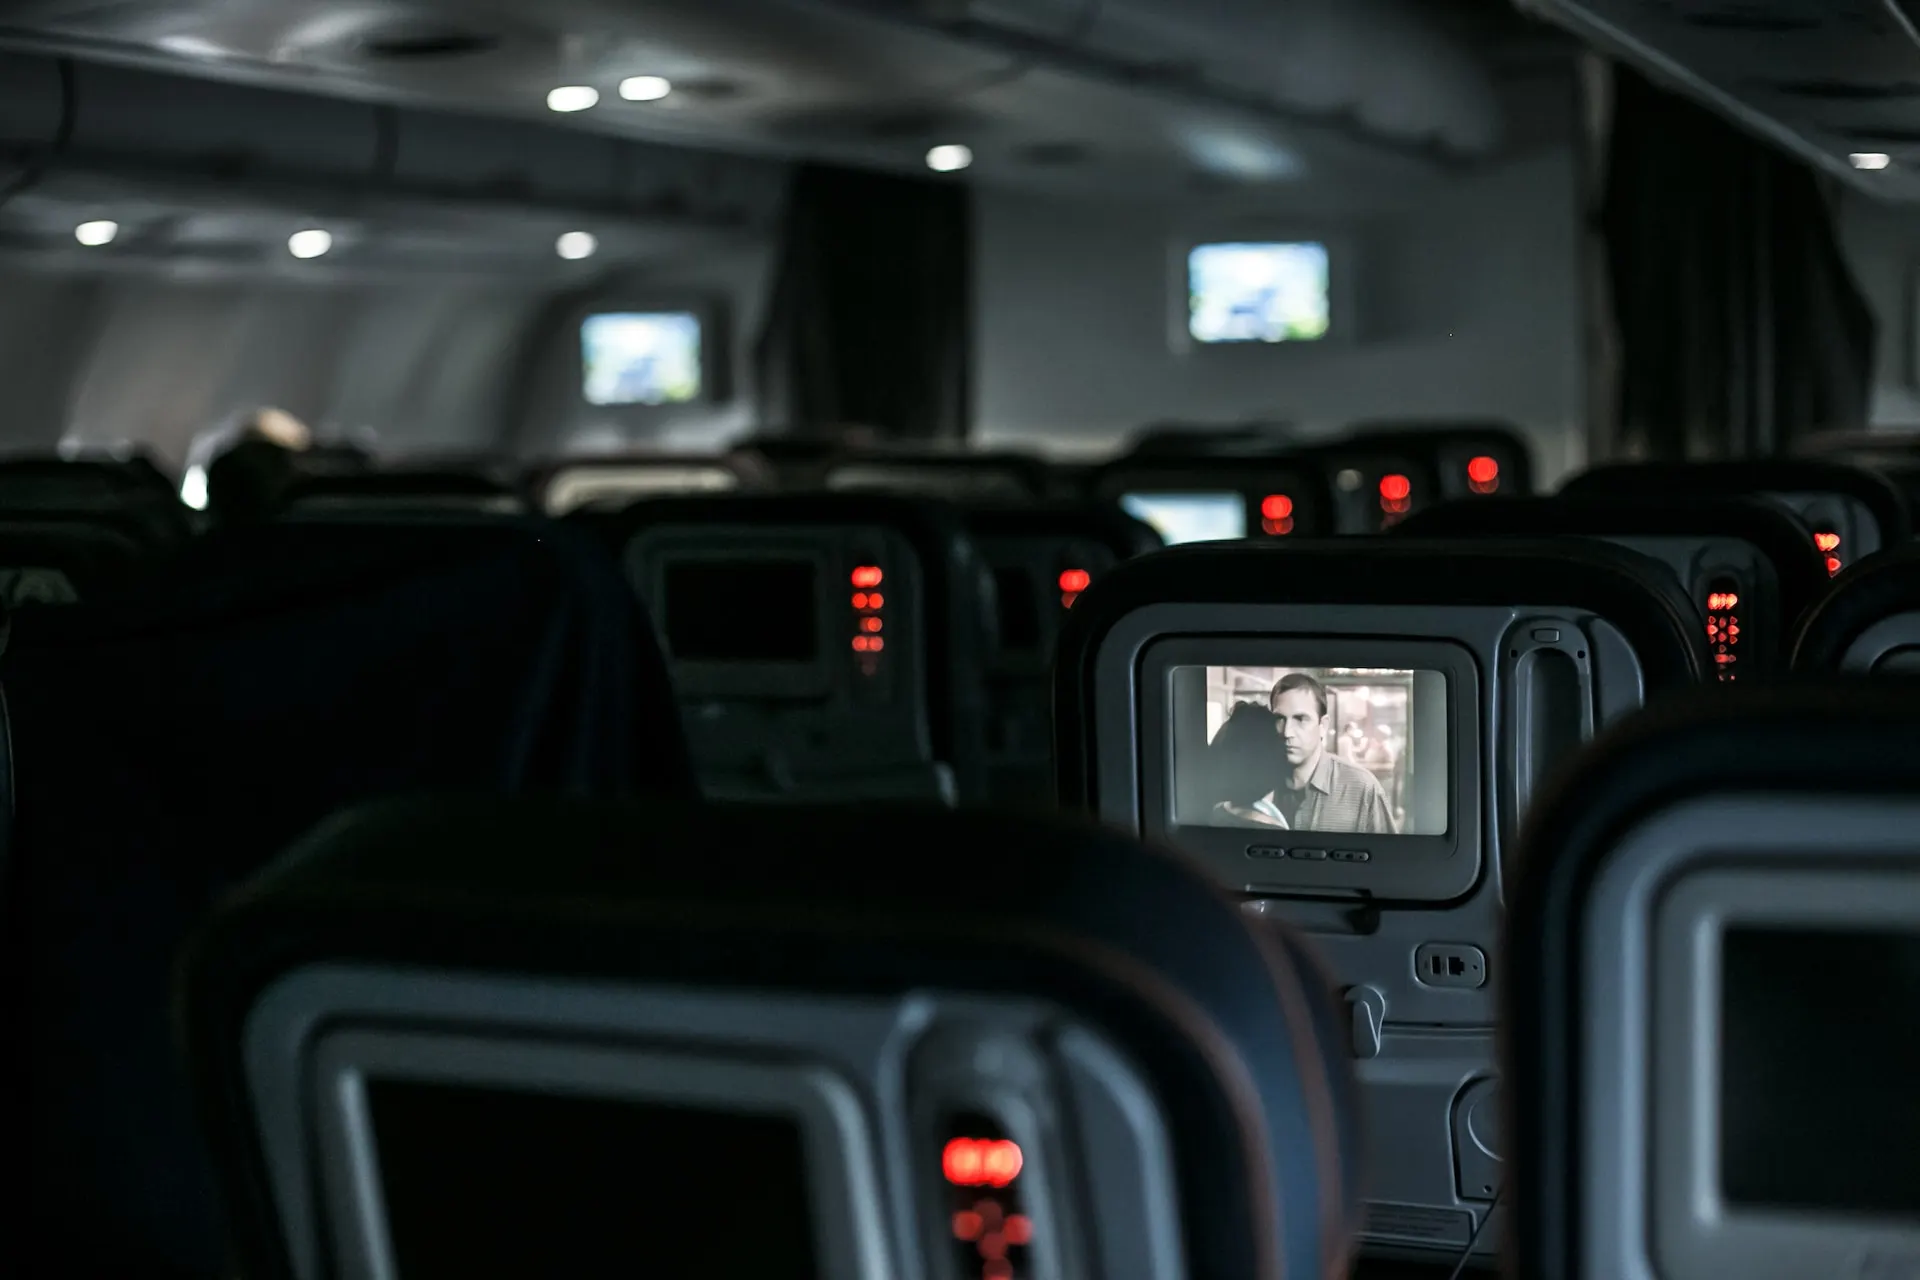 Inside the airplane, Source: Photo by Alev Takil on Unsplash